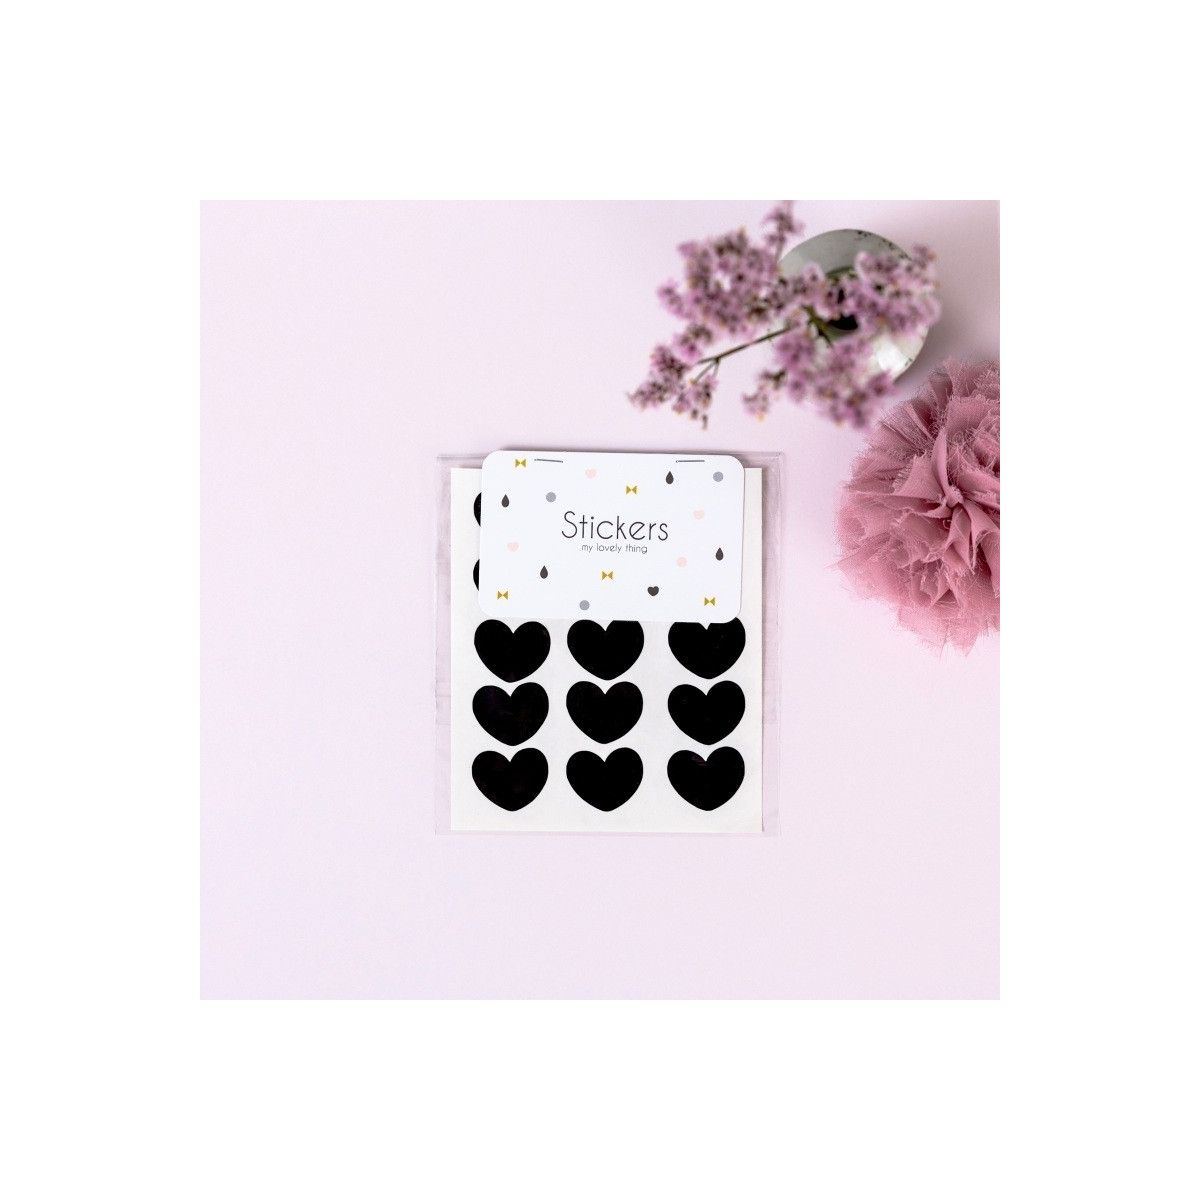 My Lovely Thing - Stickers Heart black - 배경 화면, 옷걸이 및 스티커 - 